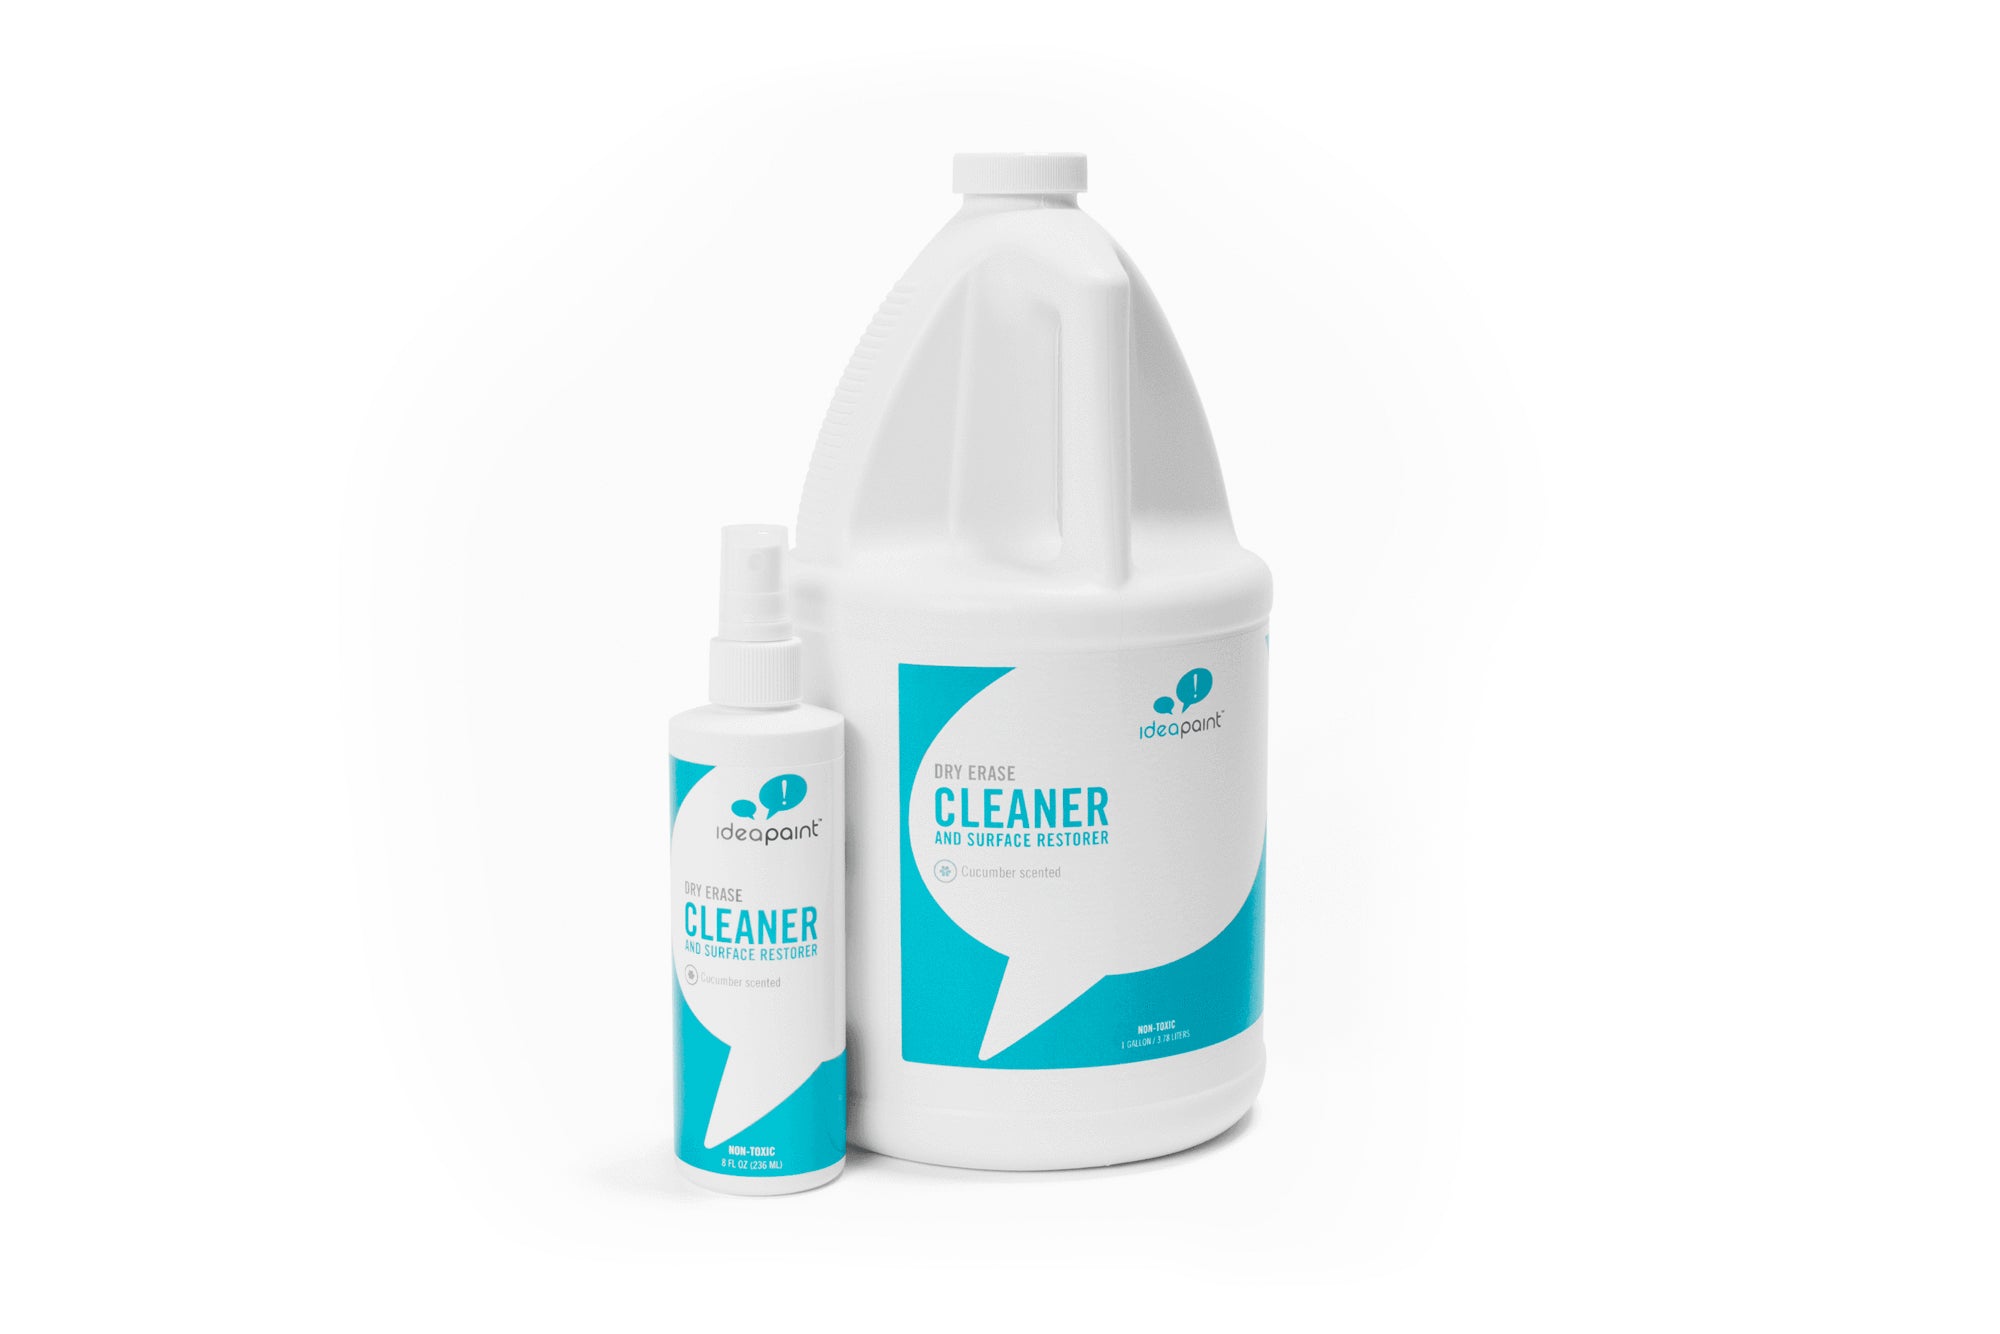 Whiteboard Cleaner  Spray & Clean to Restore Whiteboard